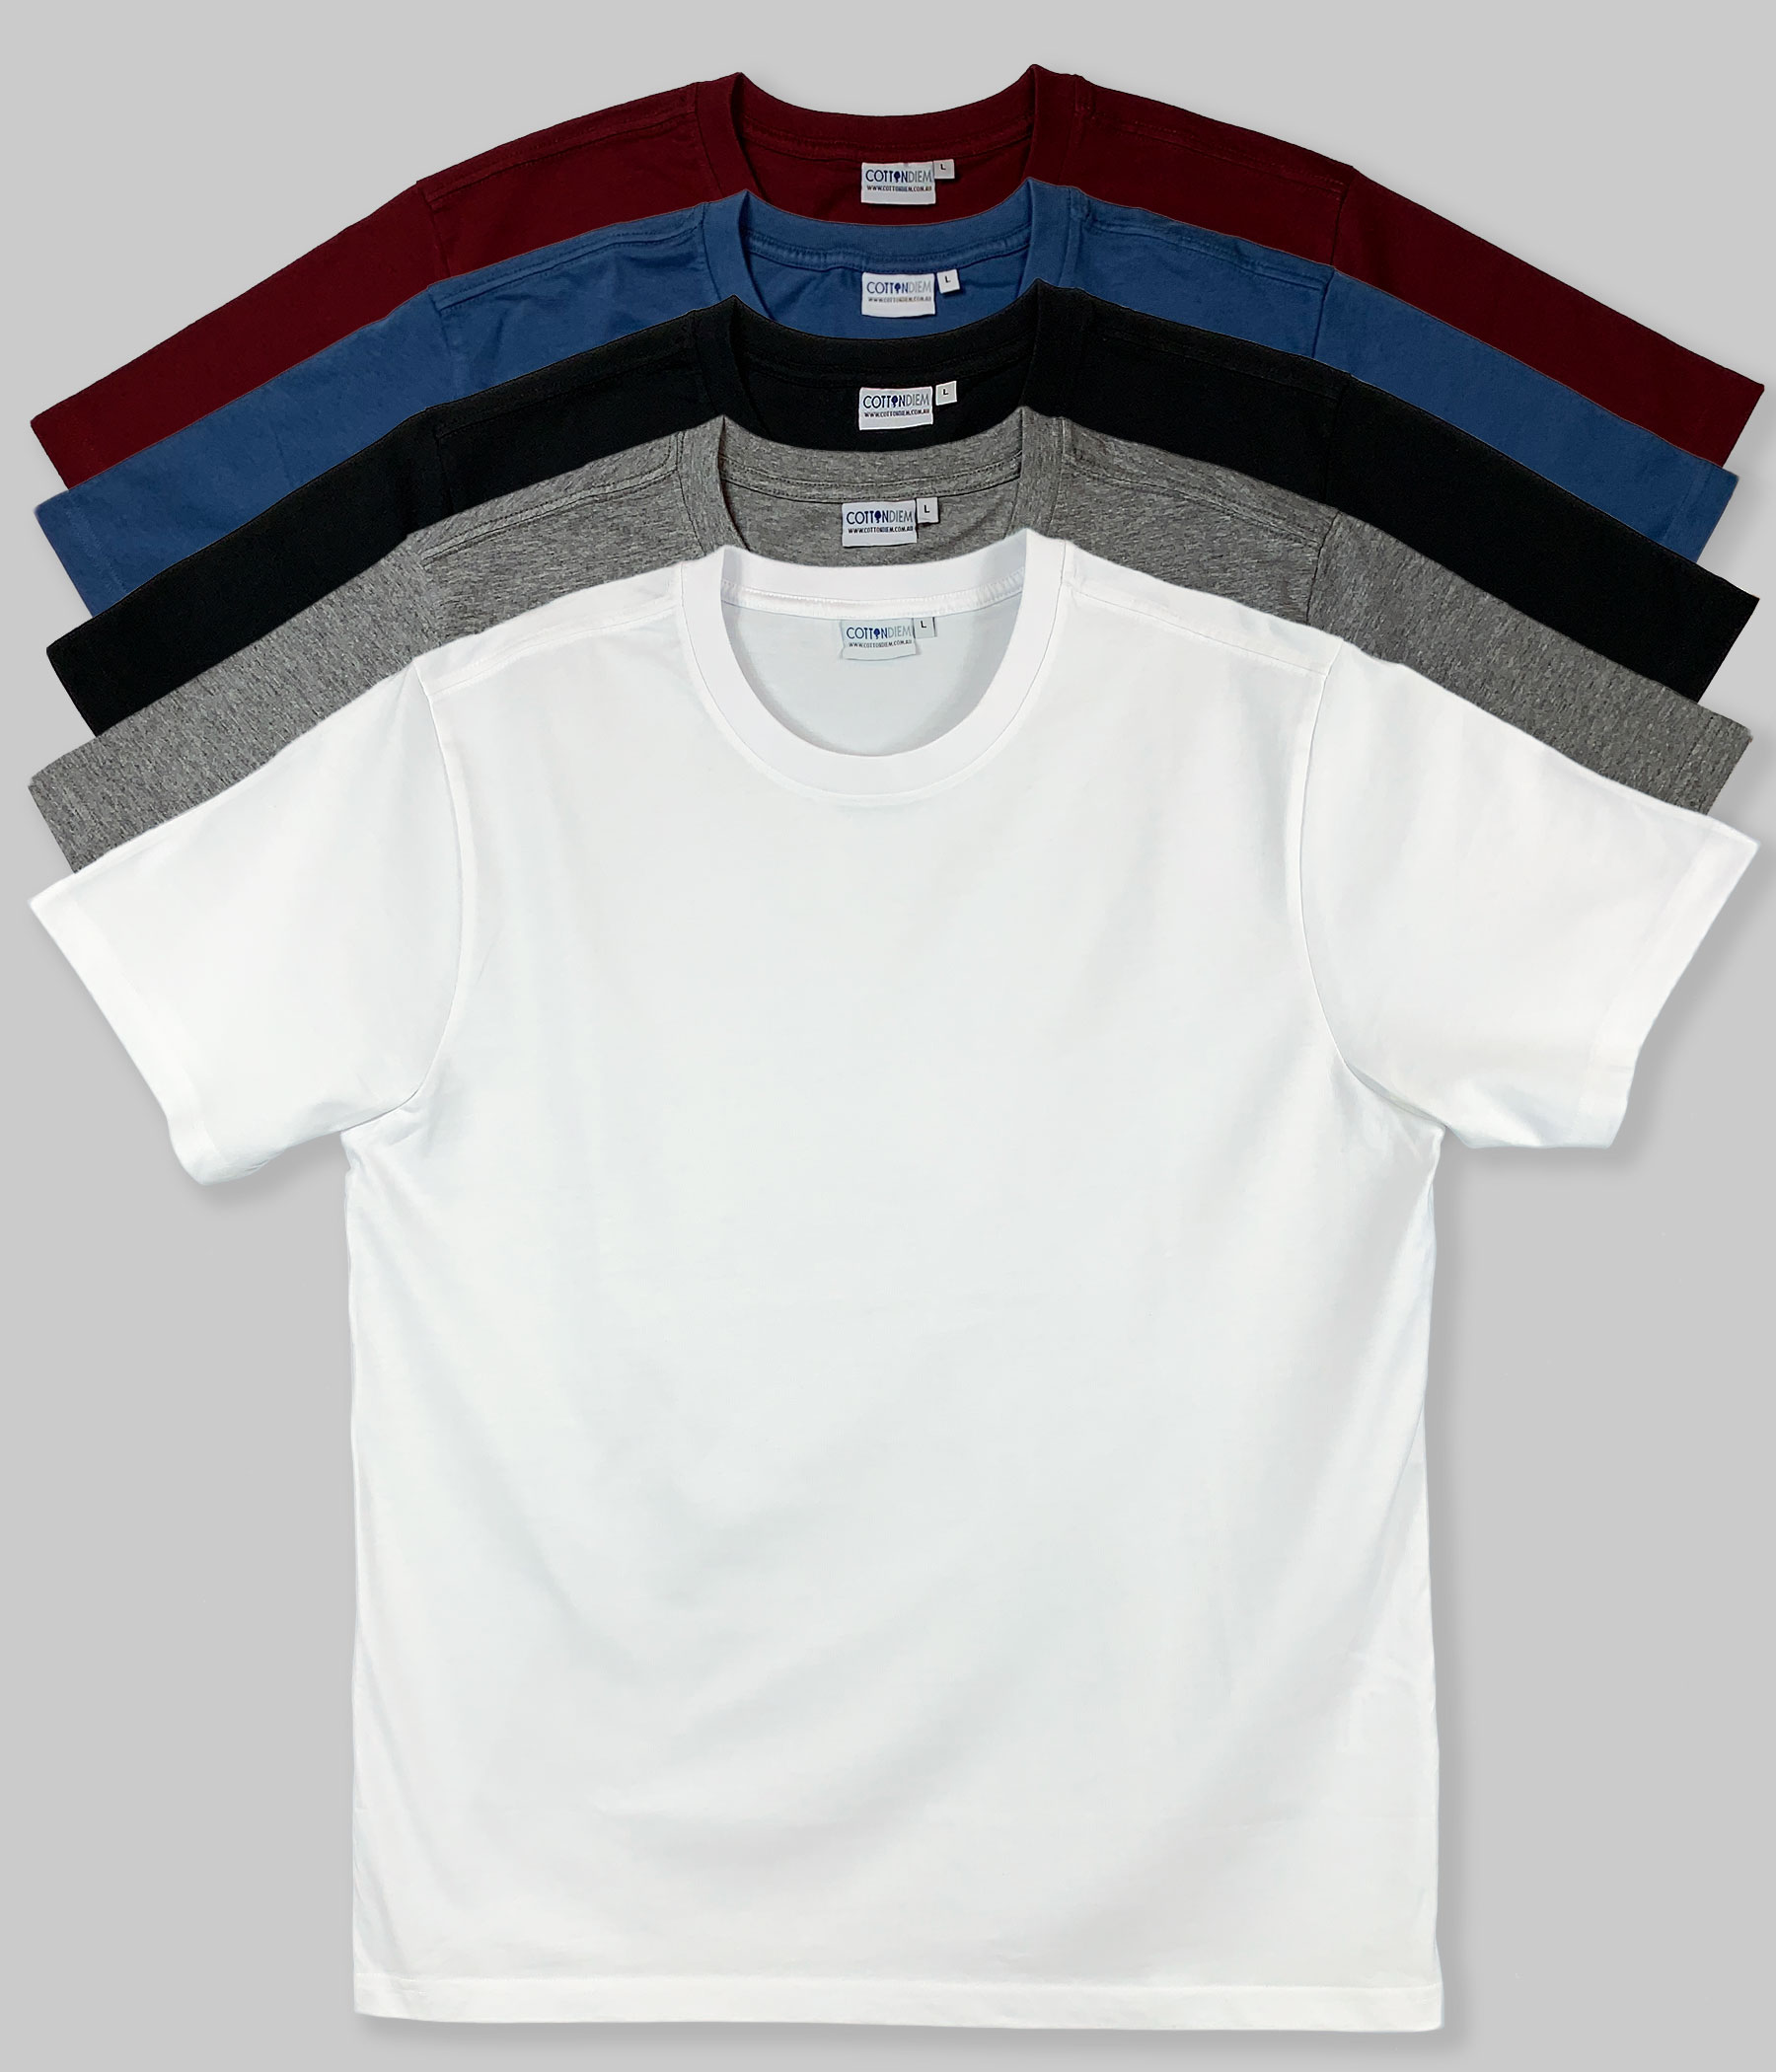 Wholesale blank t-shirts Australia